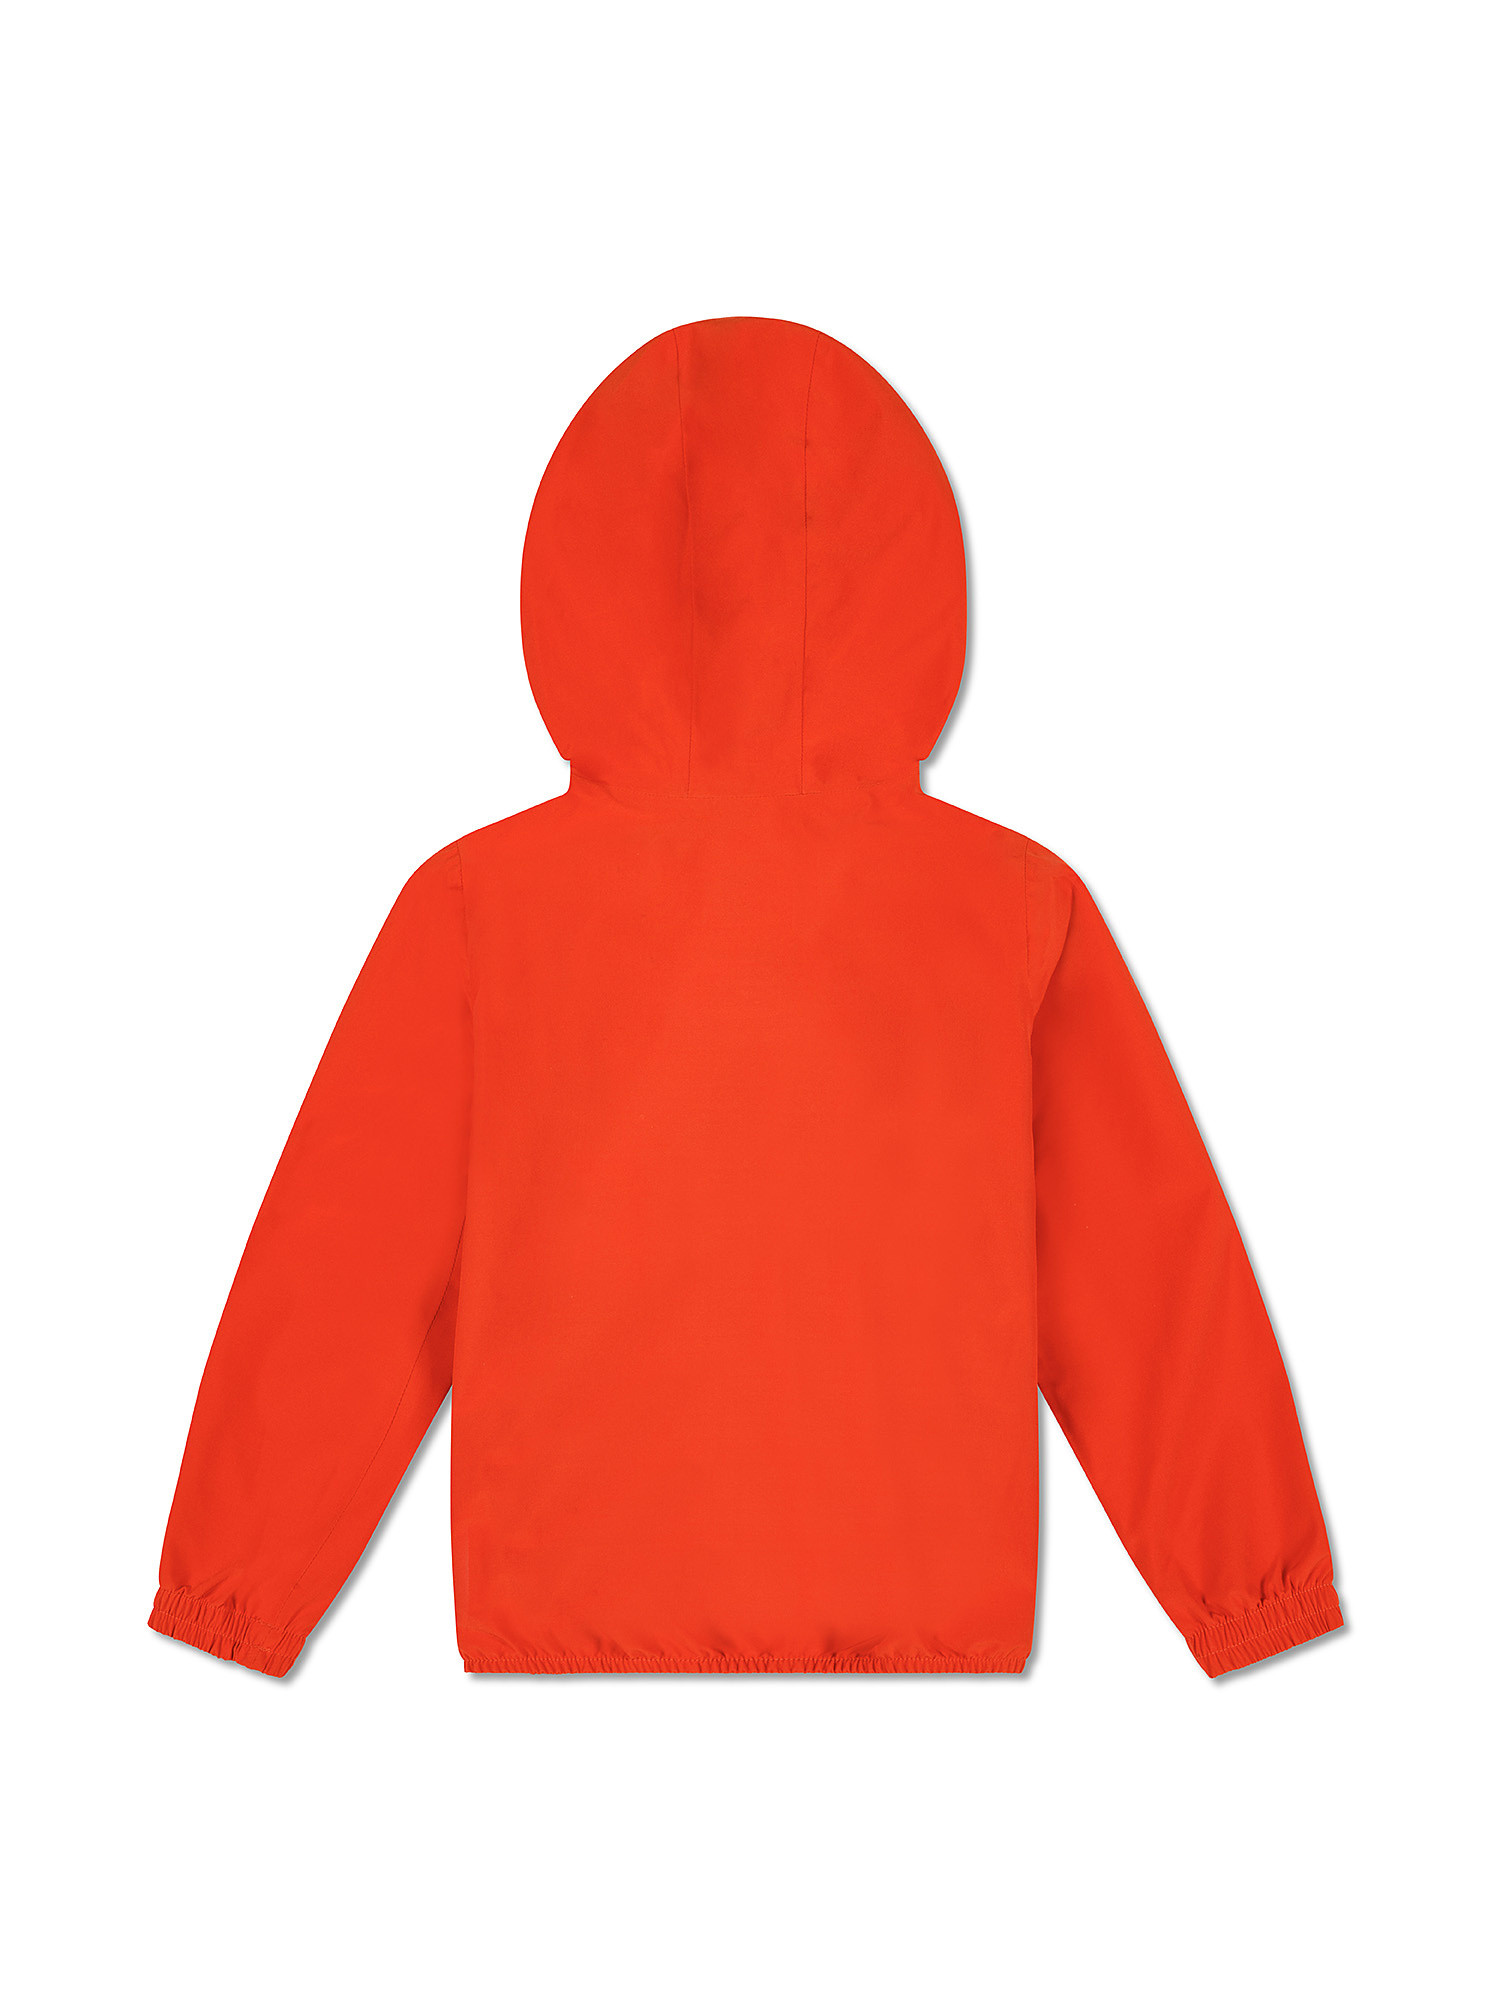 Waterproof baby jacket, Orange, large image number 1